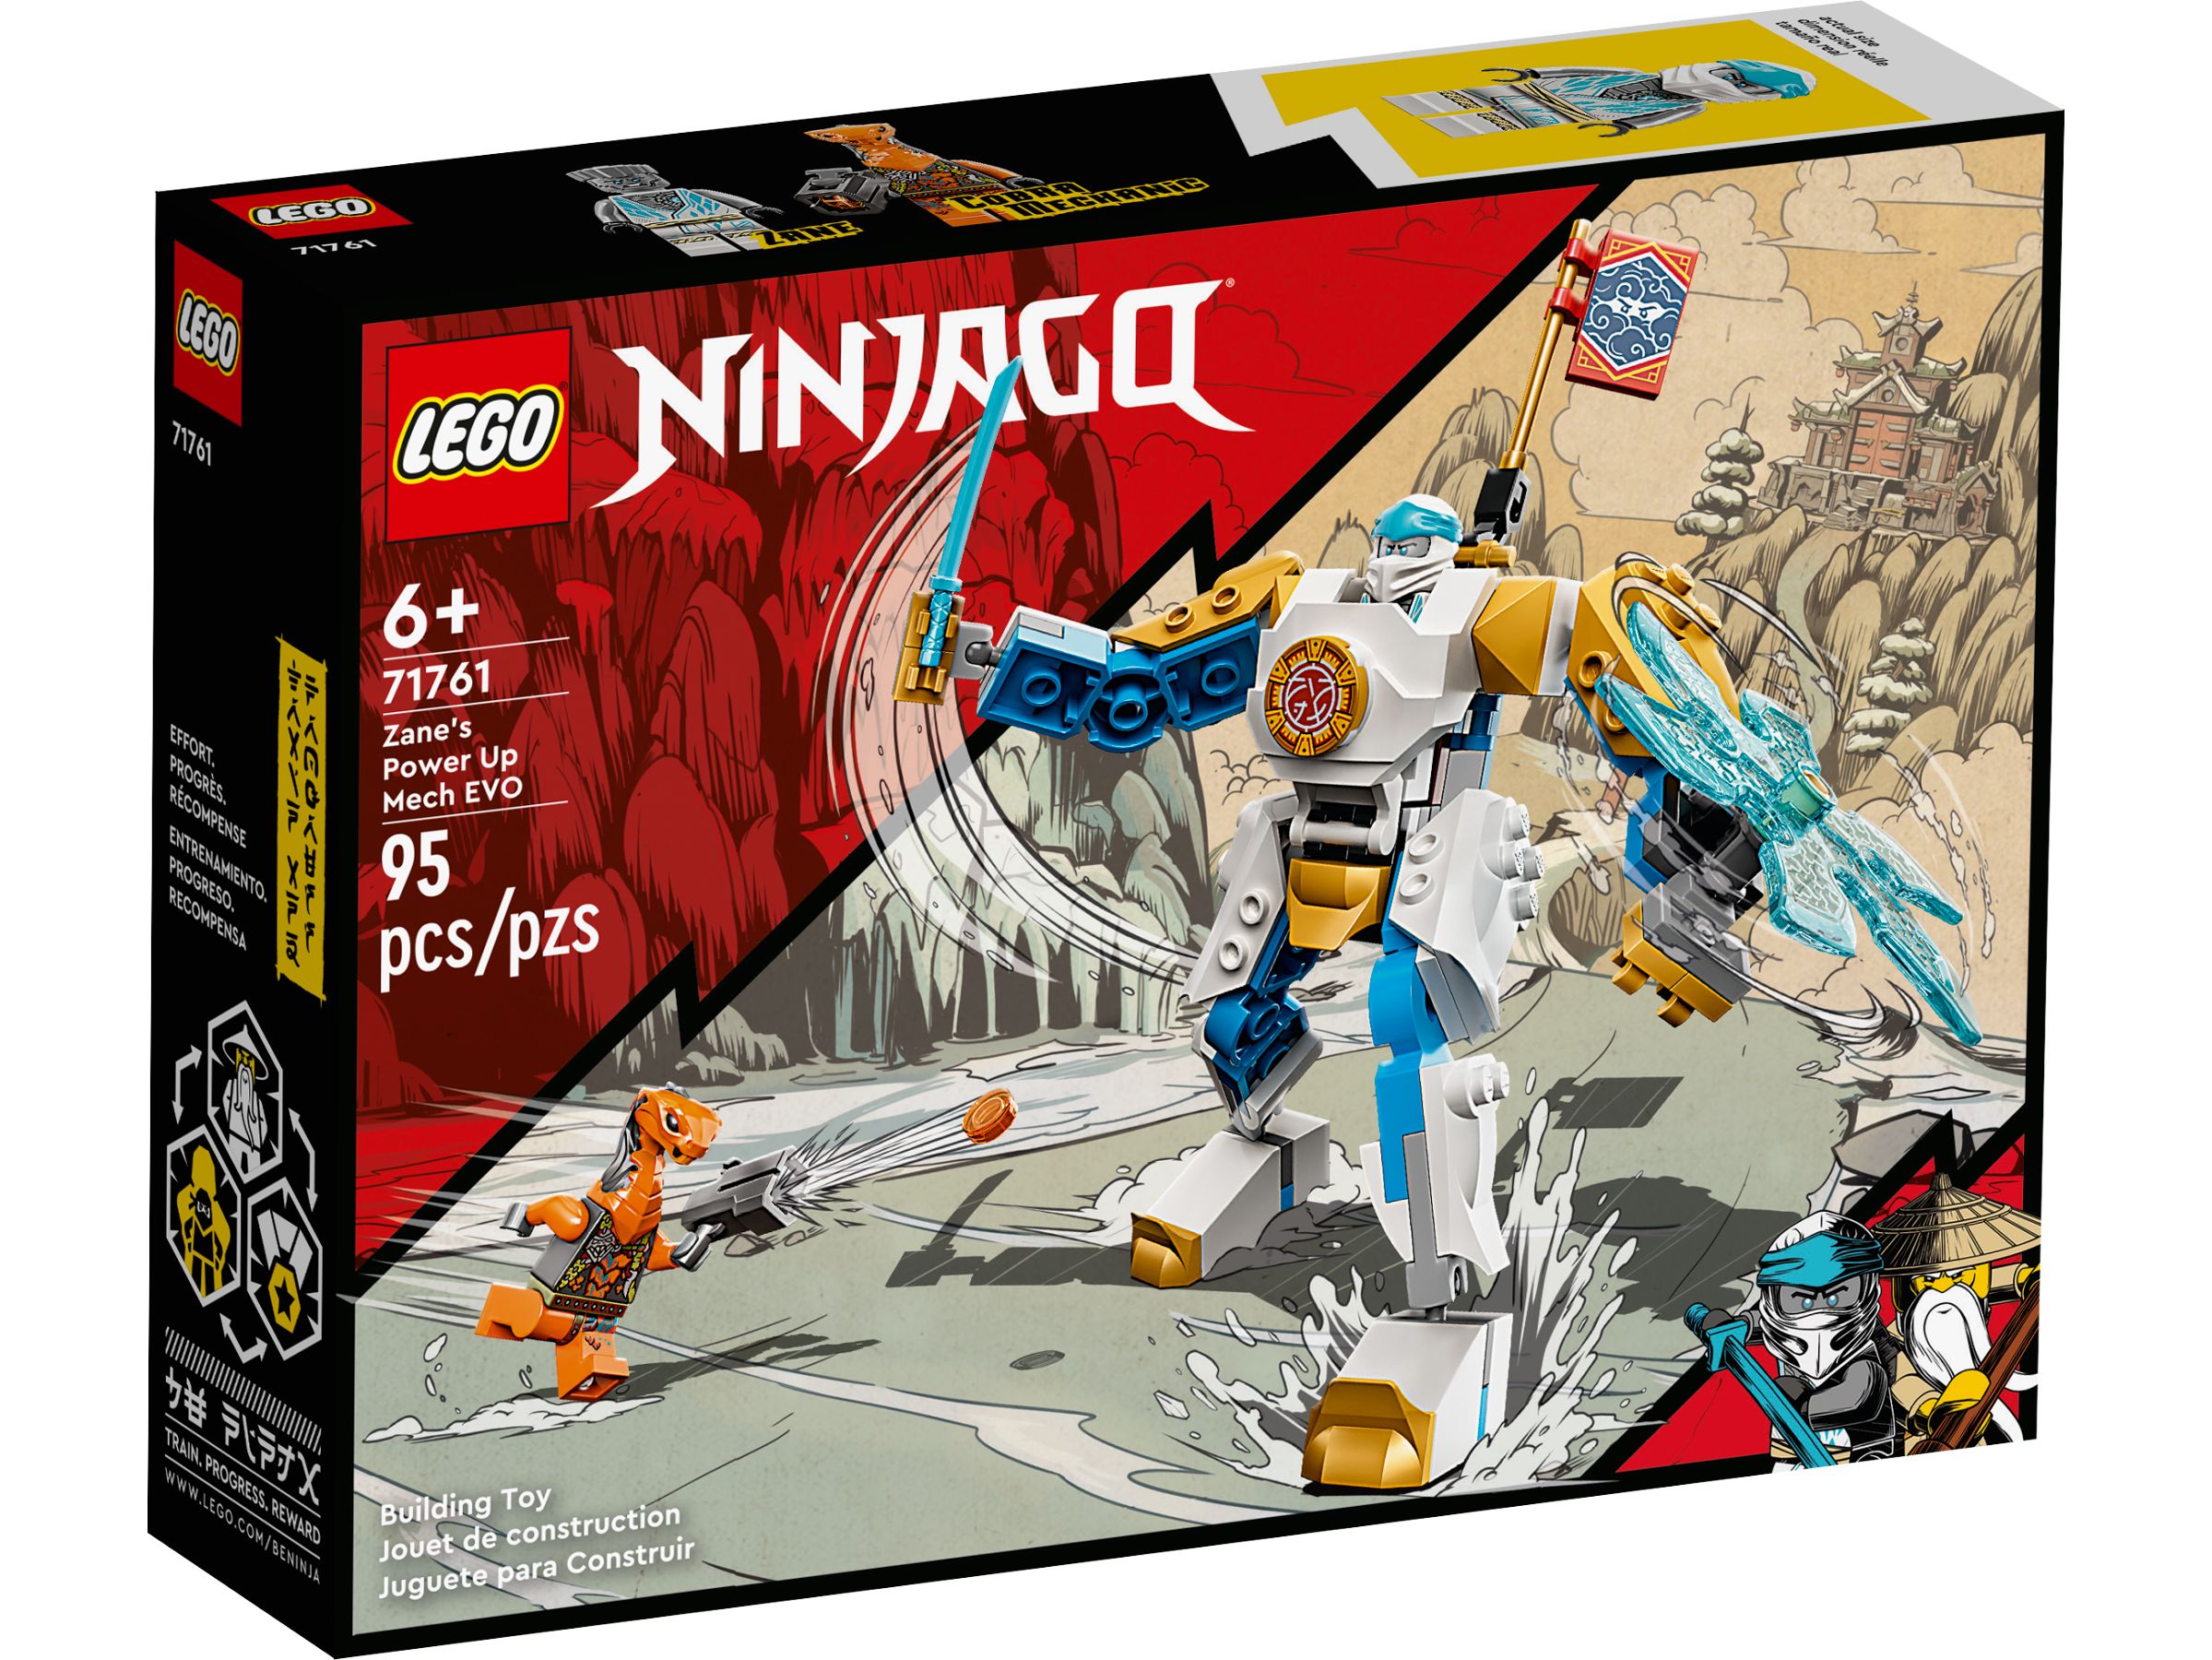 LEGO Ninjago 71761 Zanes Power-Up-Mech EVO LEGO_71761_alt1.jpg